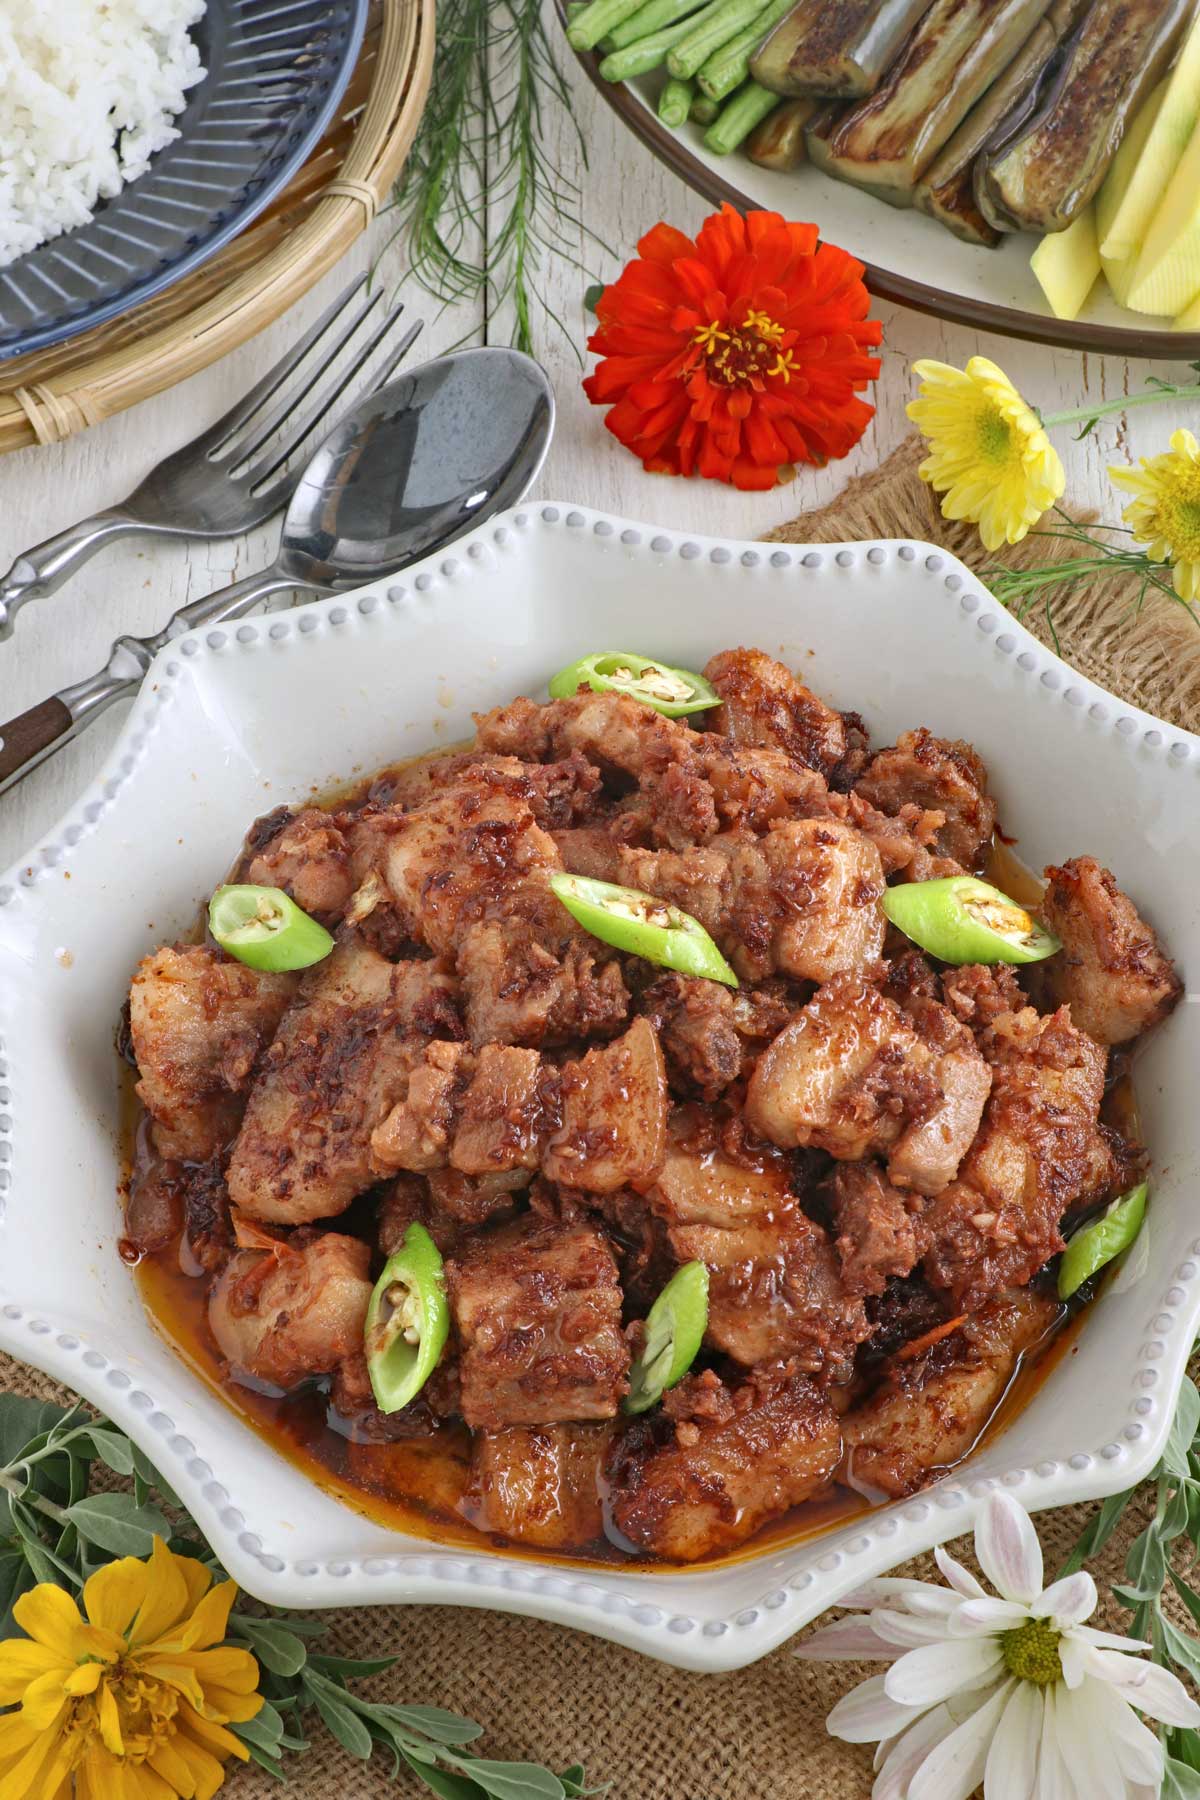 Binagoongan is pork cooked in shrimp paste.